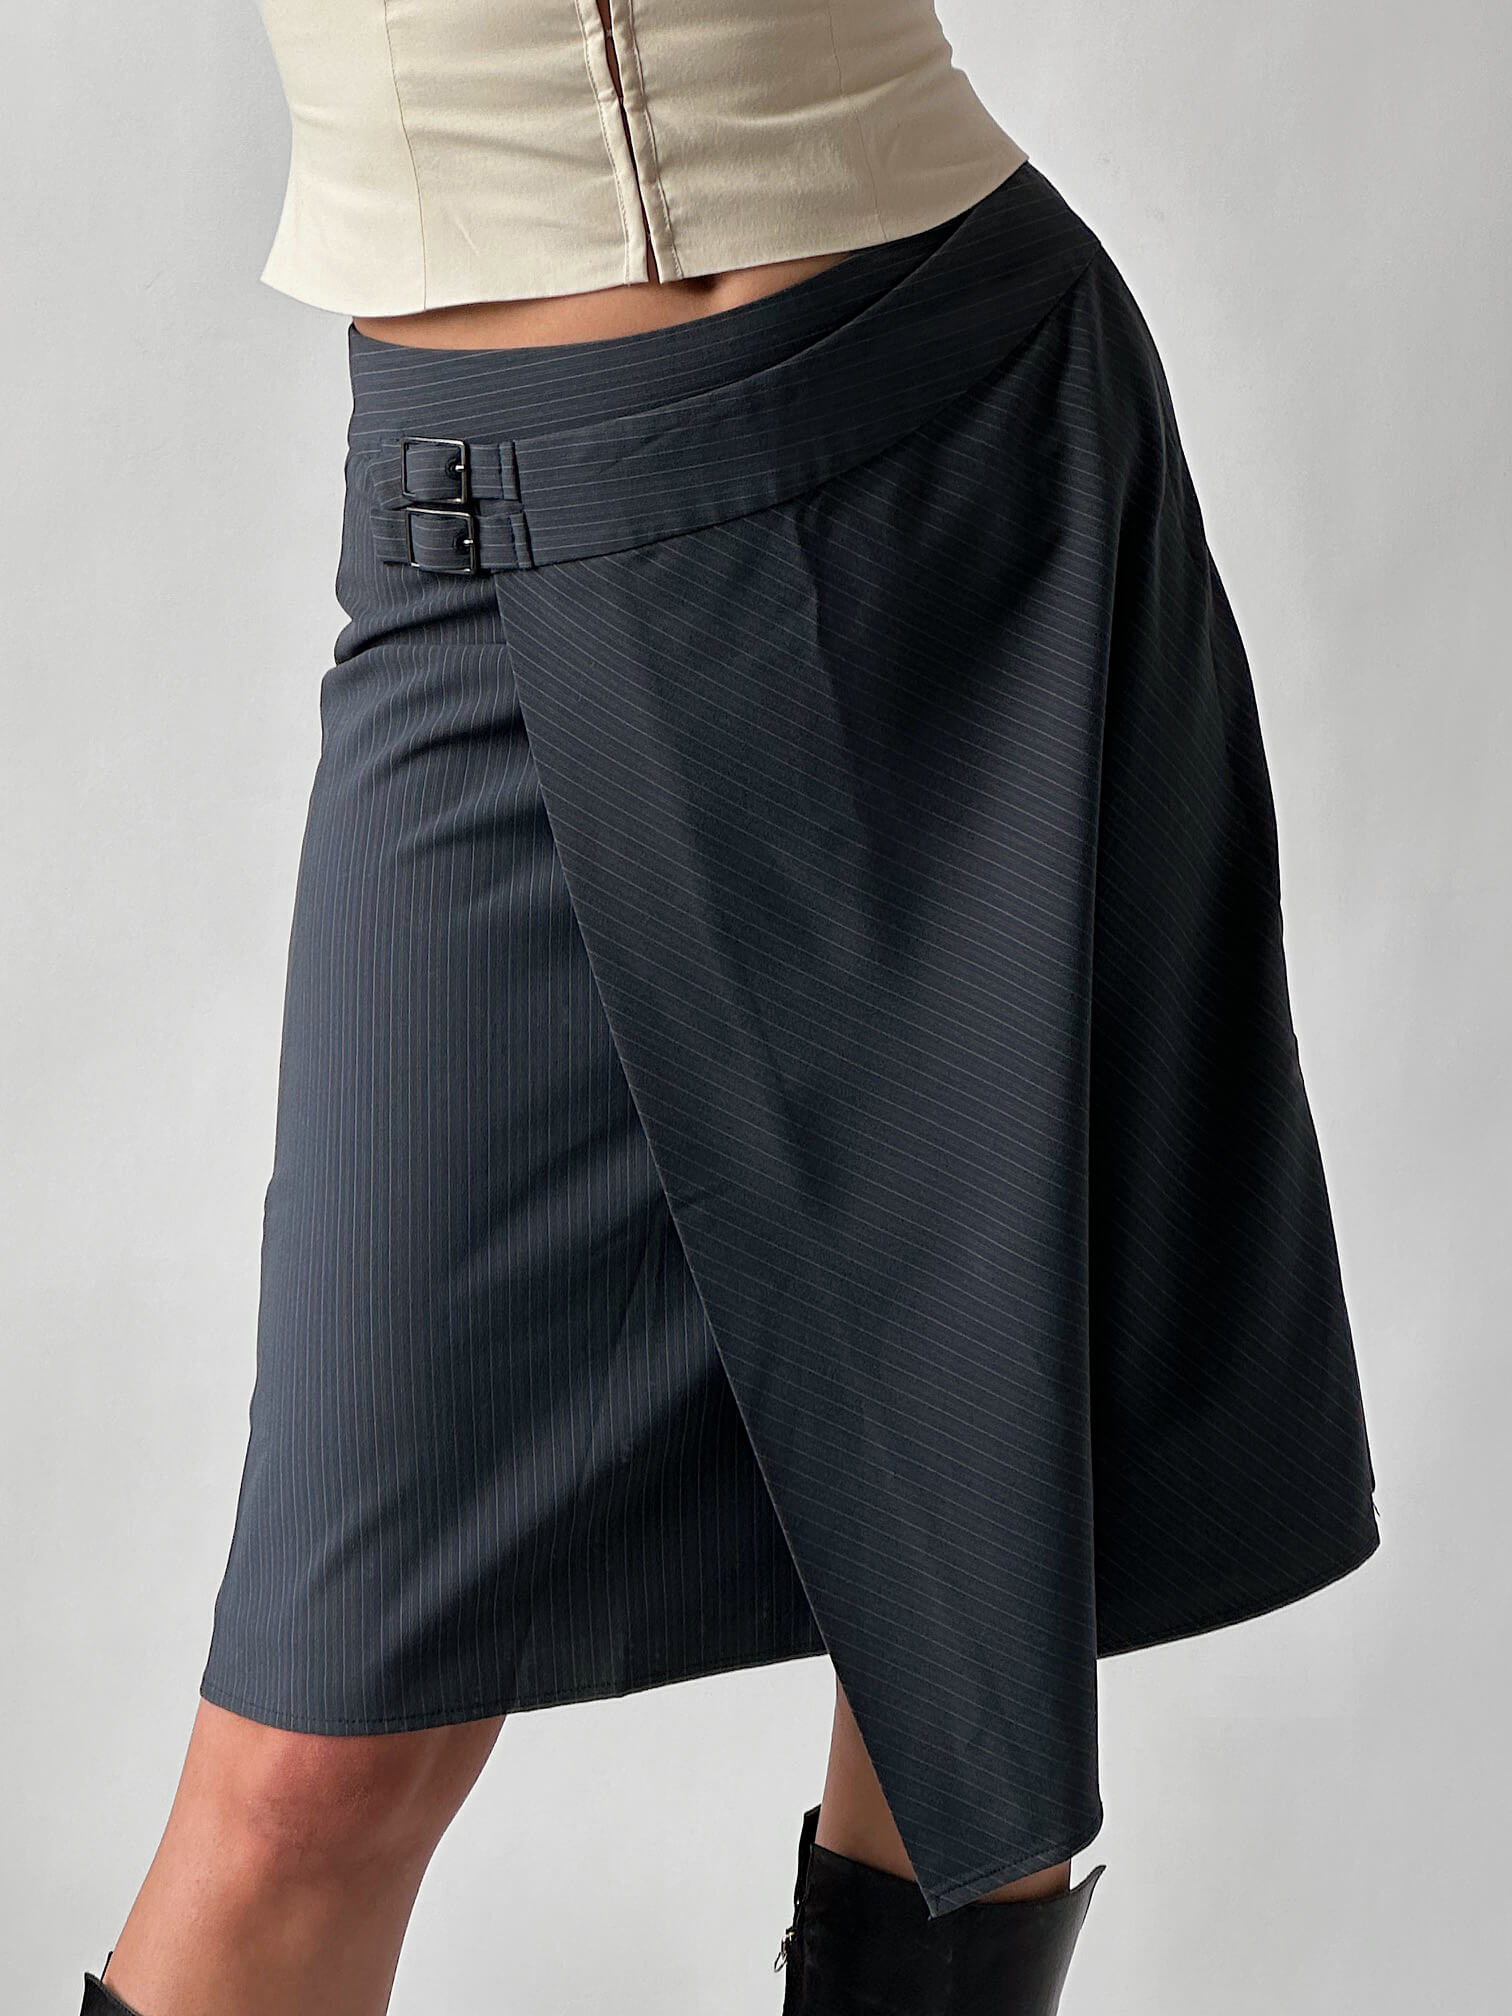 Vintage Contrast Pinstripe Buckle Skirt | S